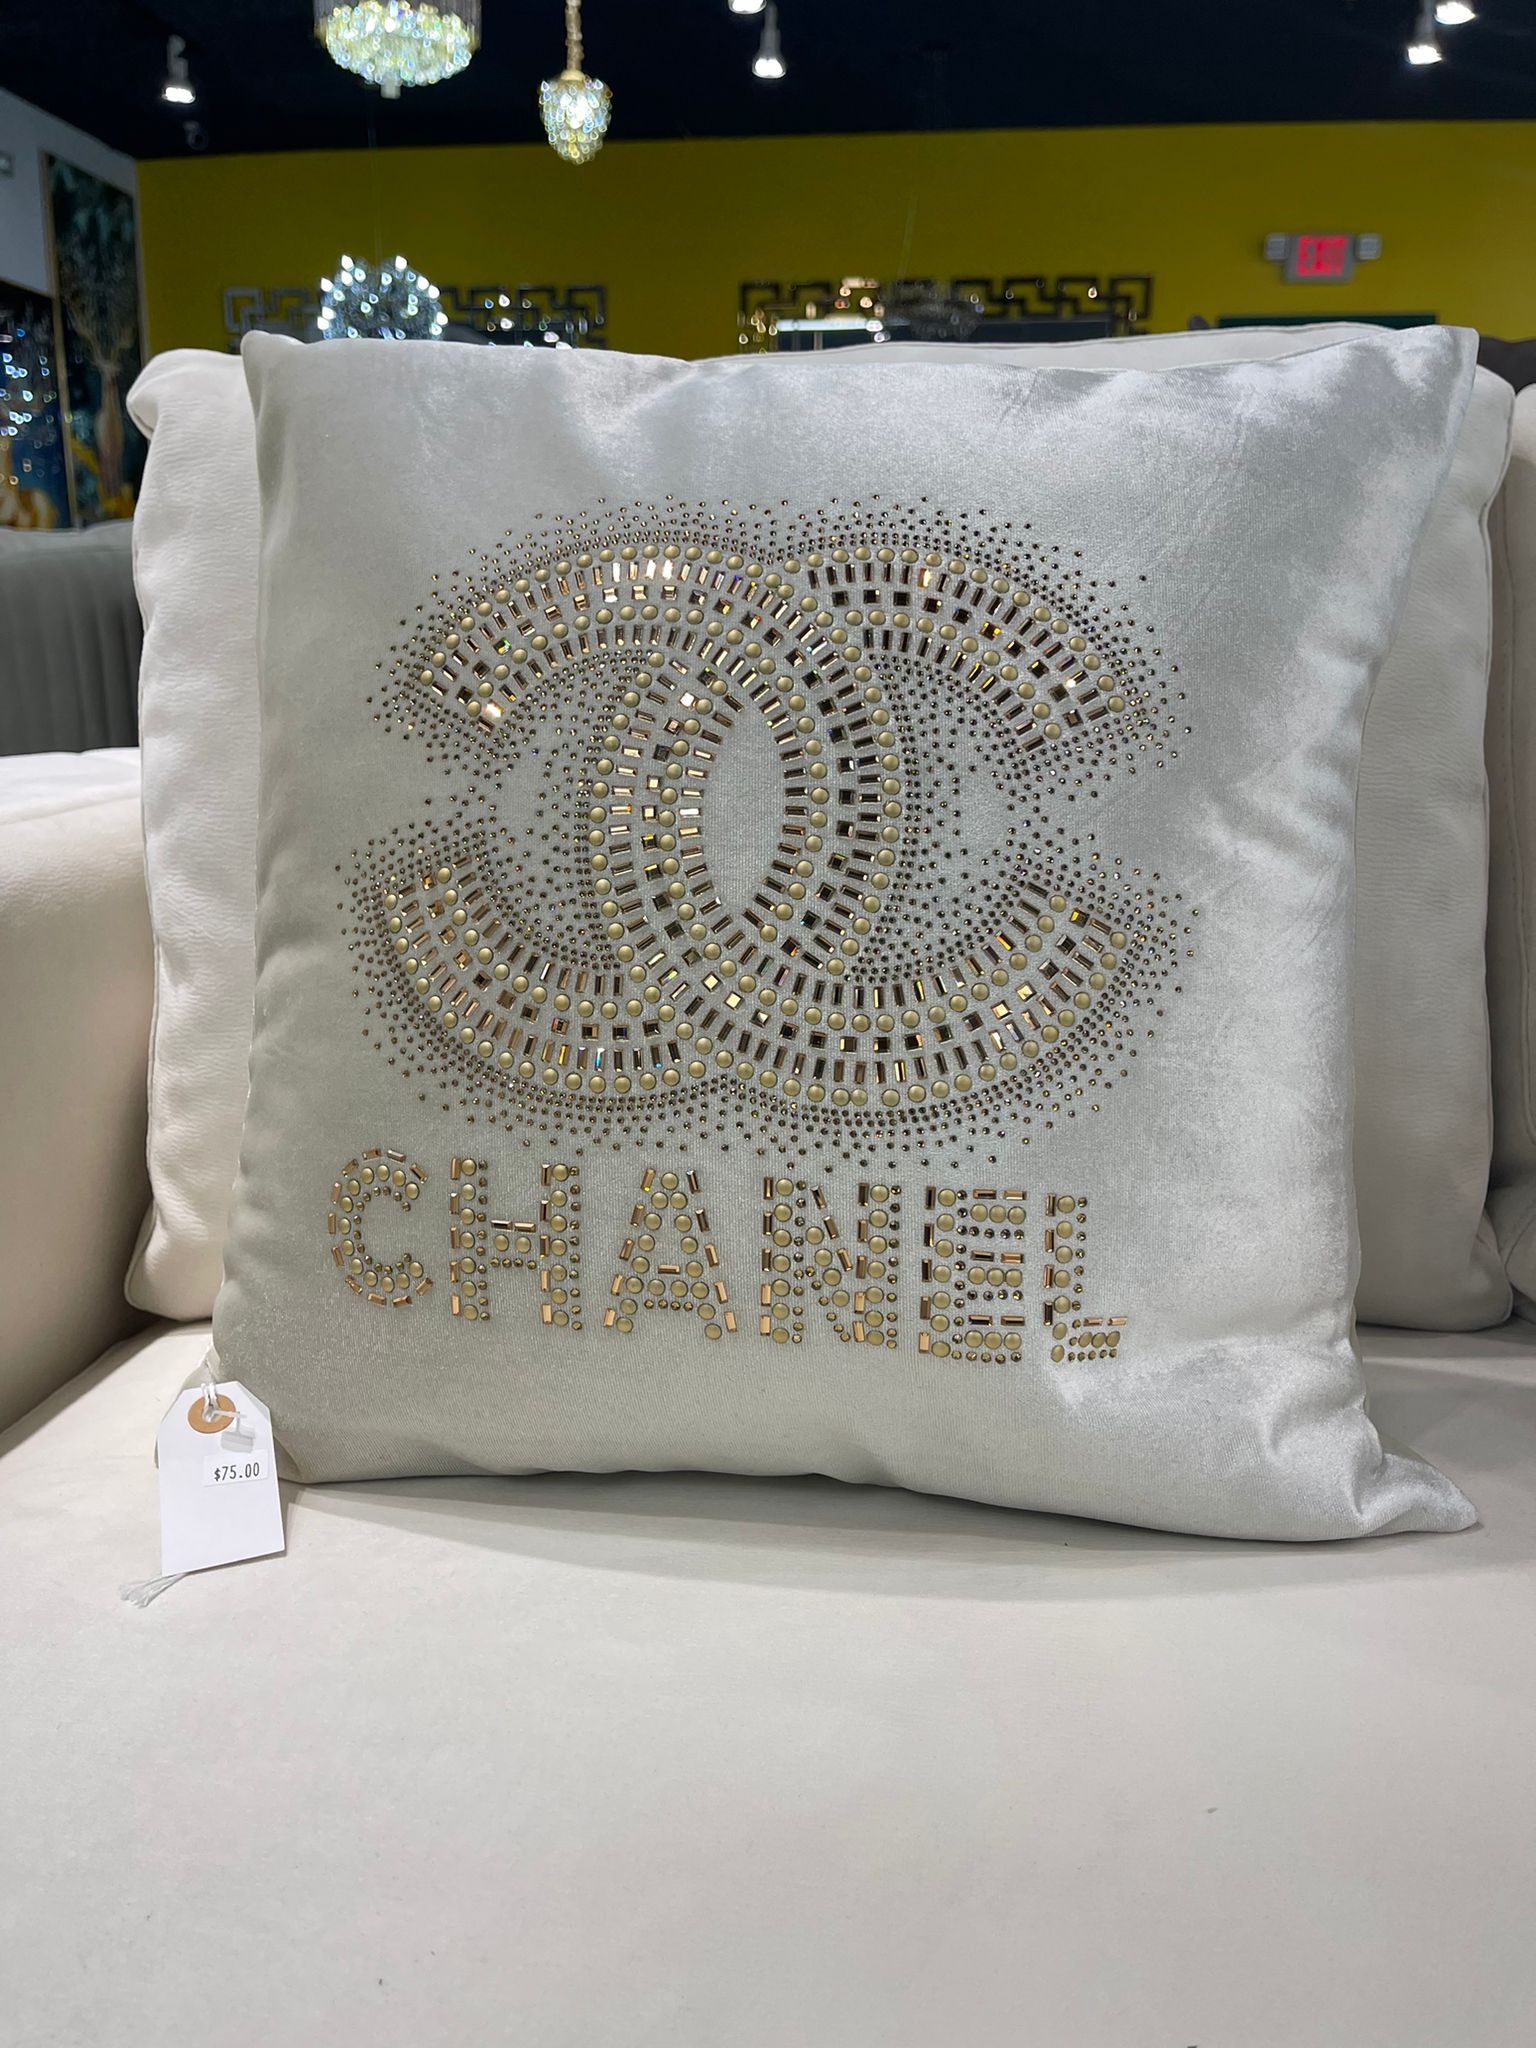 Chanel Throw Pillow 